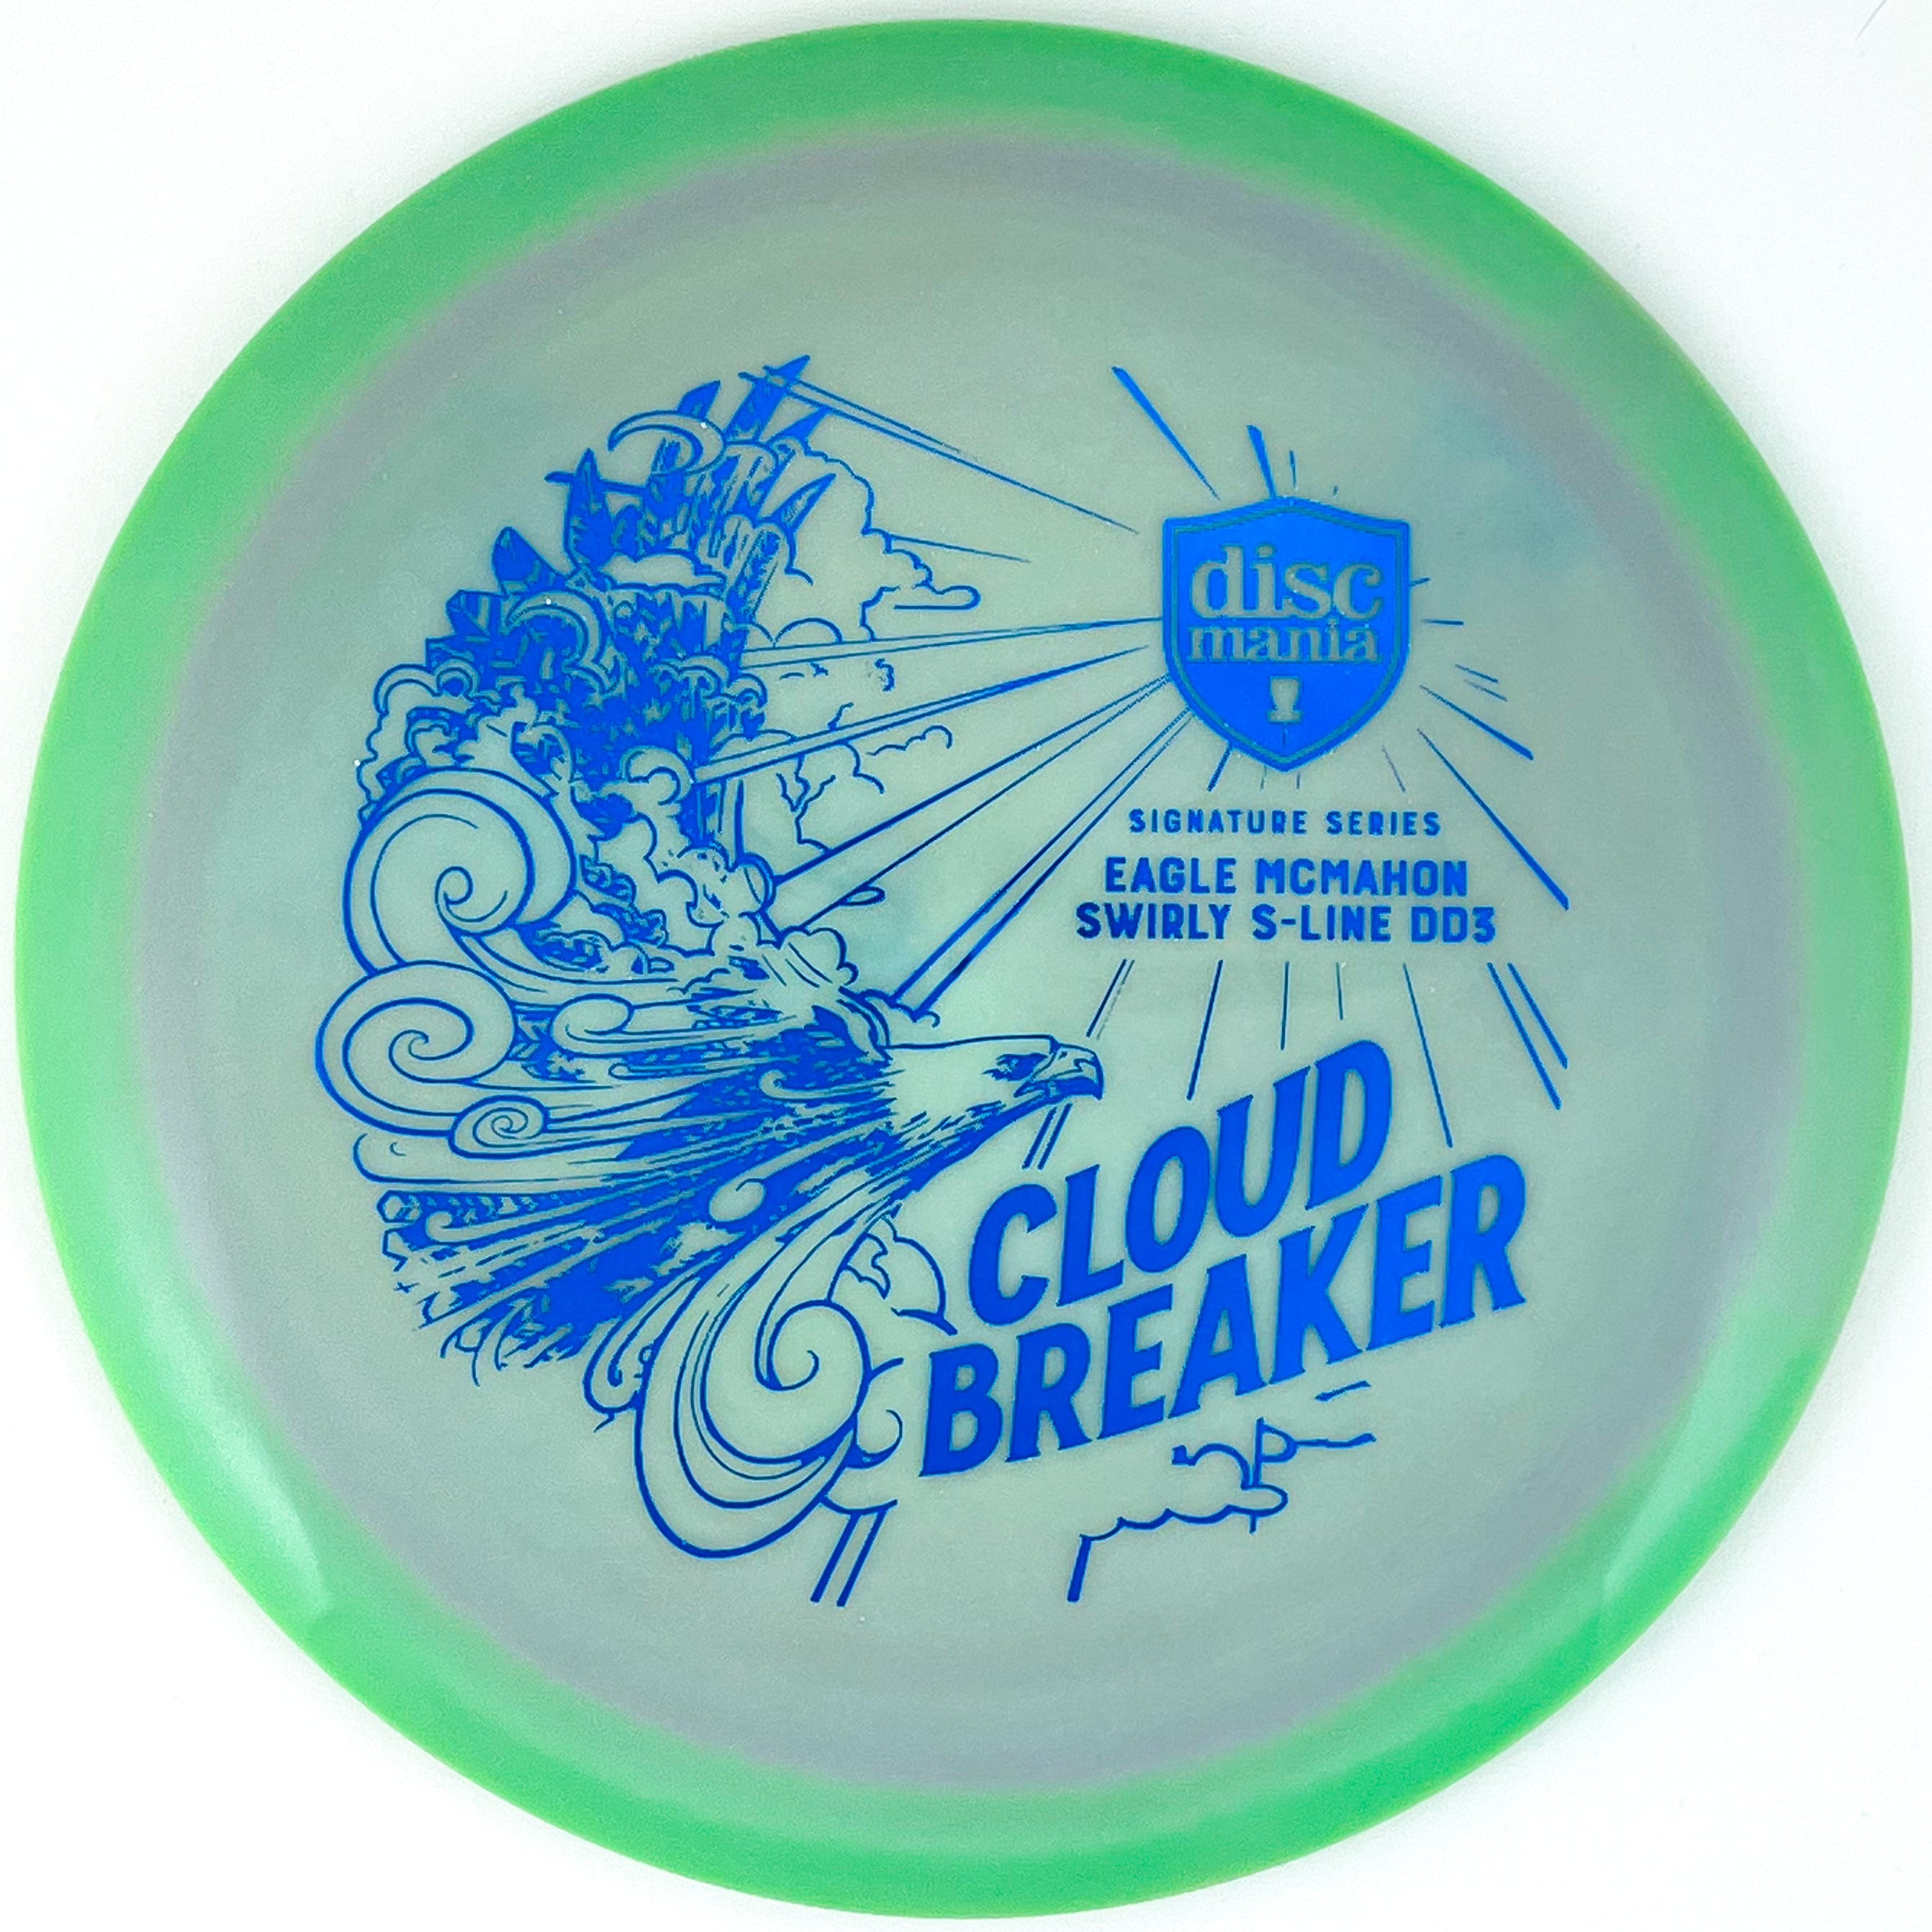 Eagle McMahon Cloud Breaker 1 | S-Line DD3